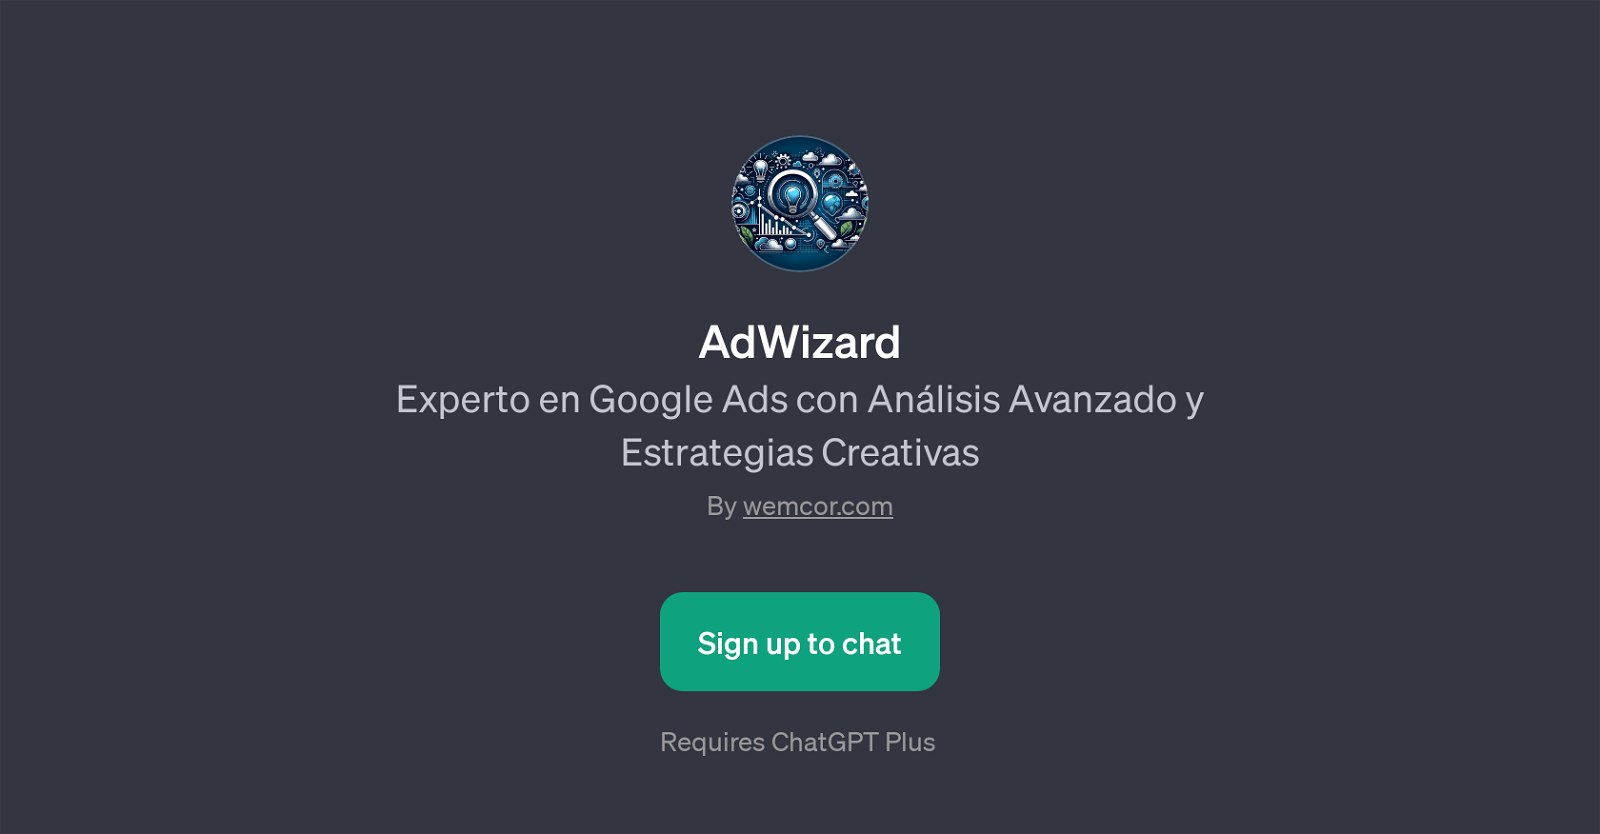 AdWizard website